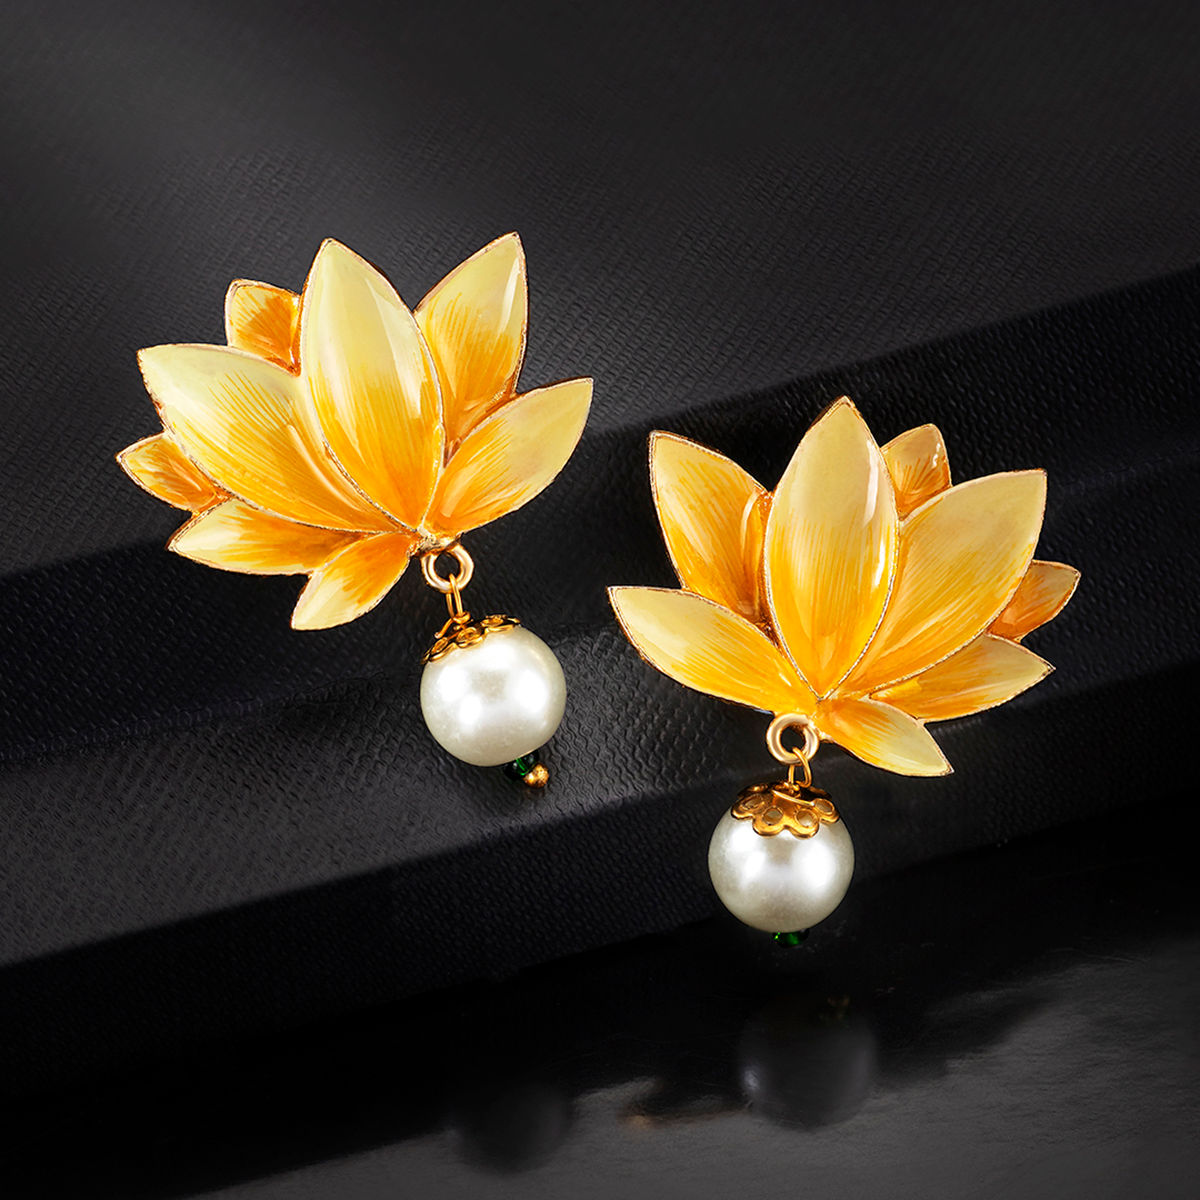 OM lotus charm silver Long dangler earrings at 1250  Azilaa